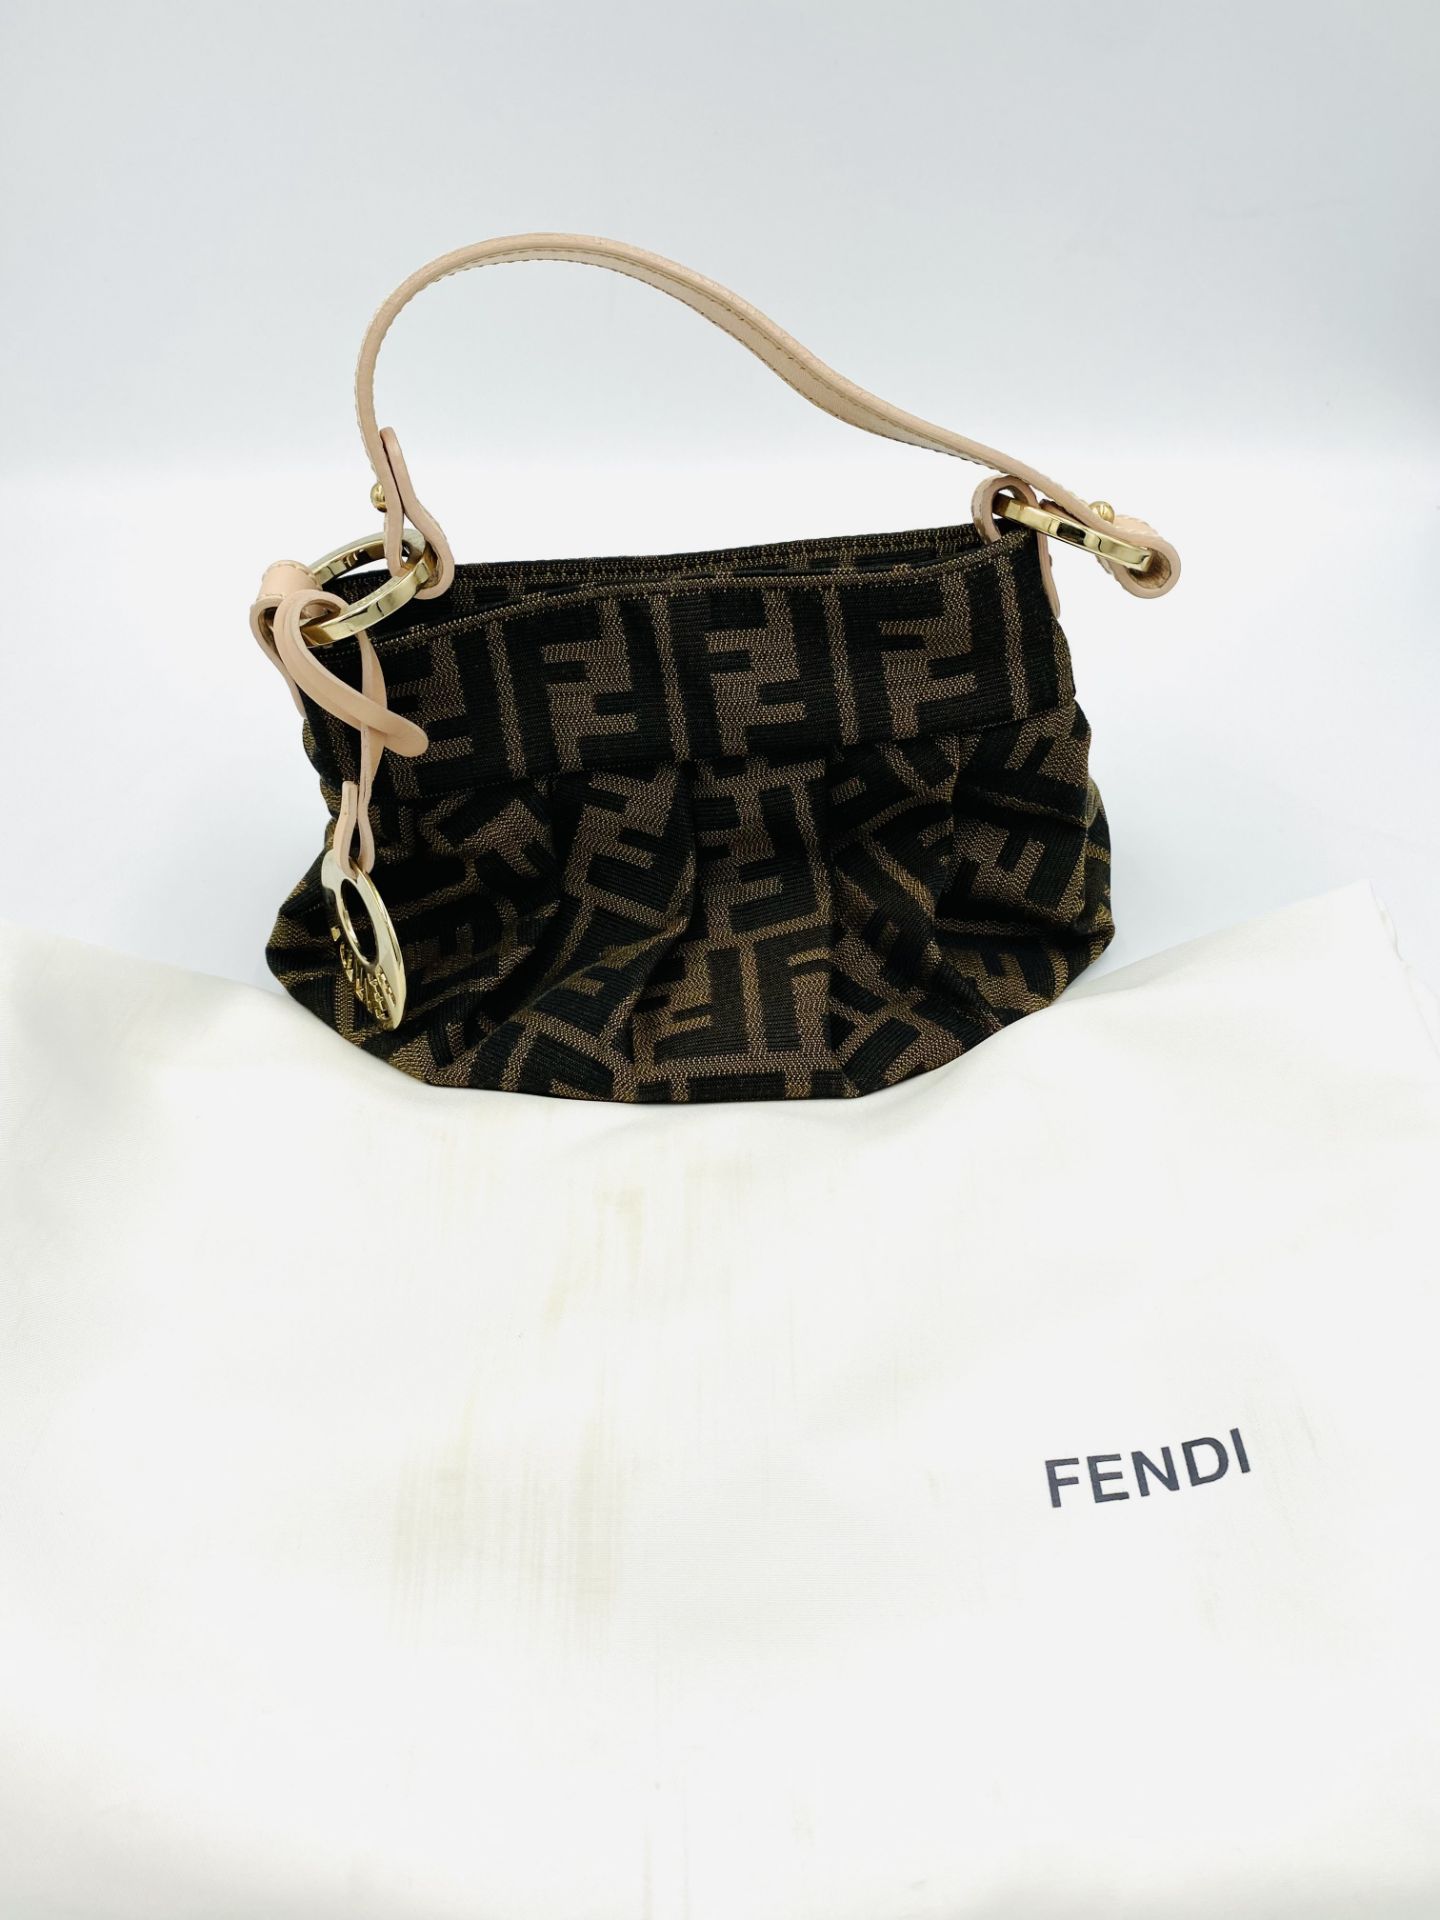 Fendi mini Zucca bag with dust bag - Image 7 of 7